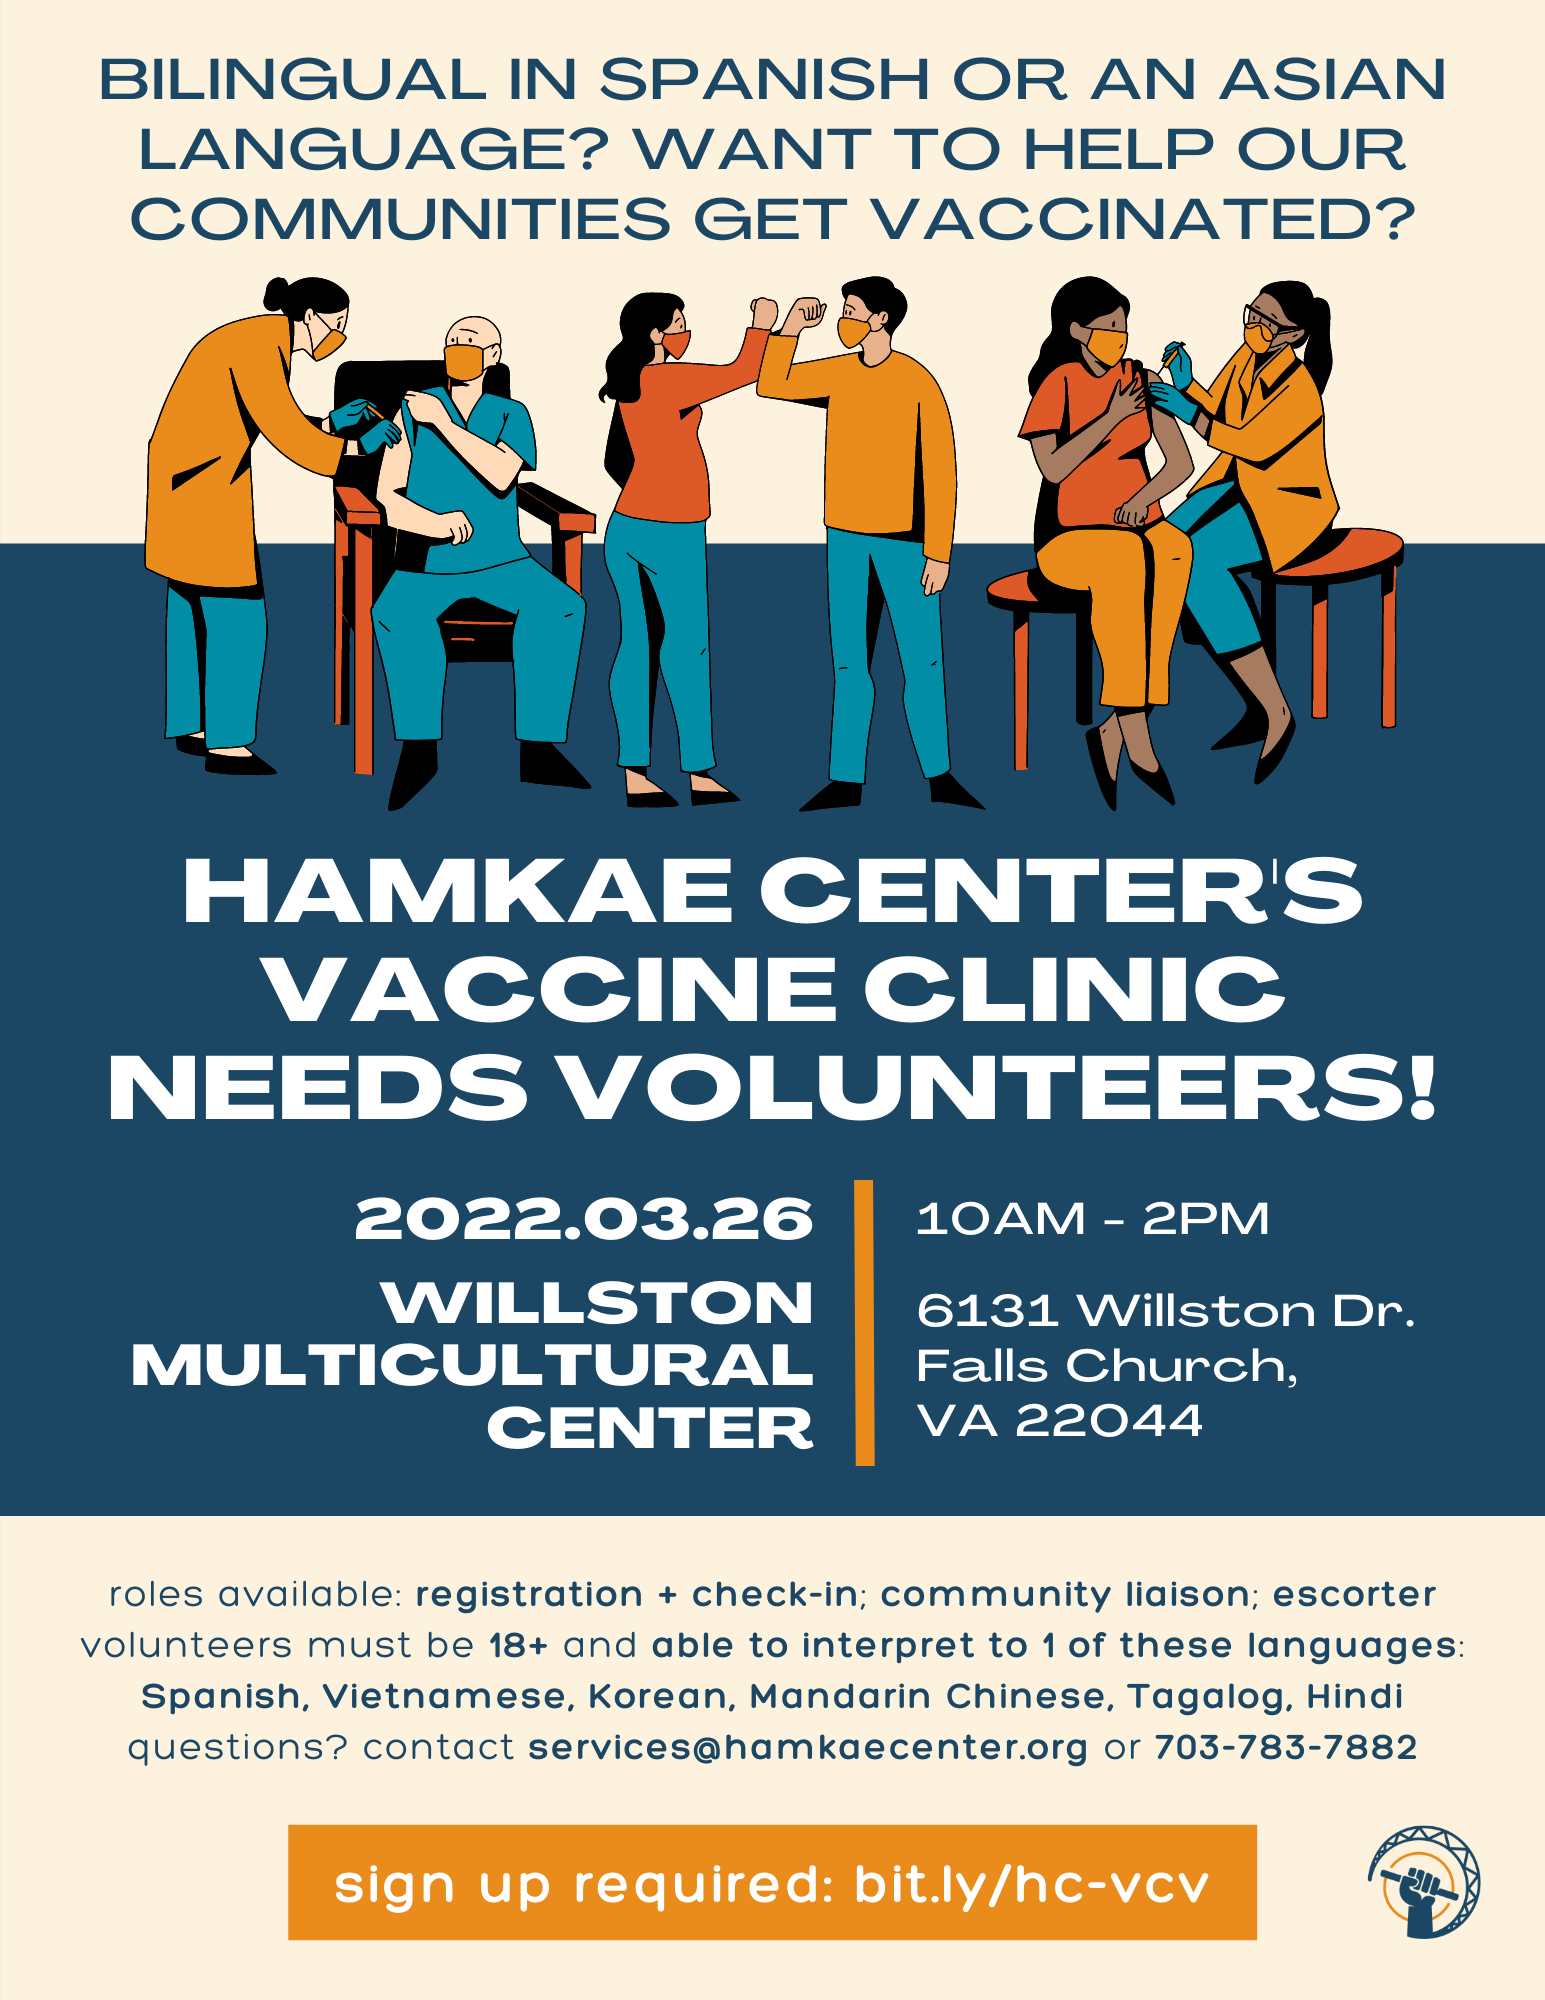 Hamkae Center's Vaccine Clinic Needs Volunteers!